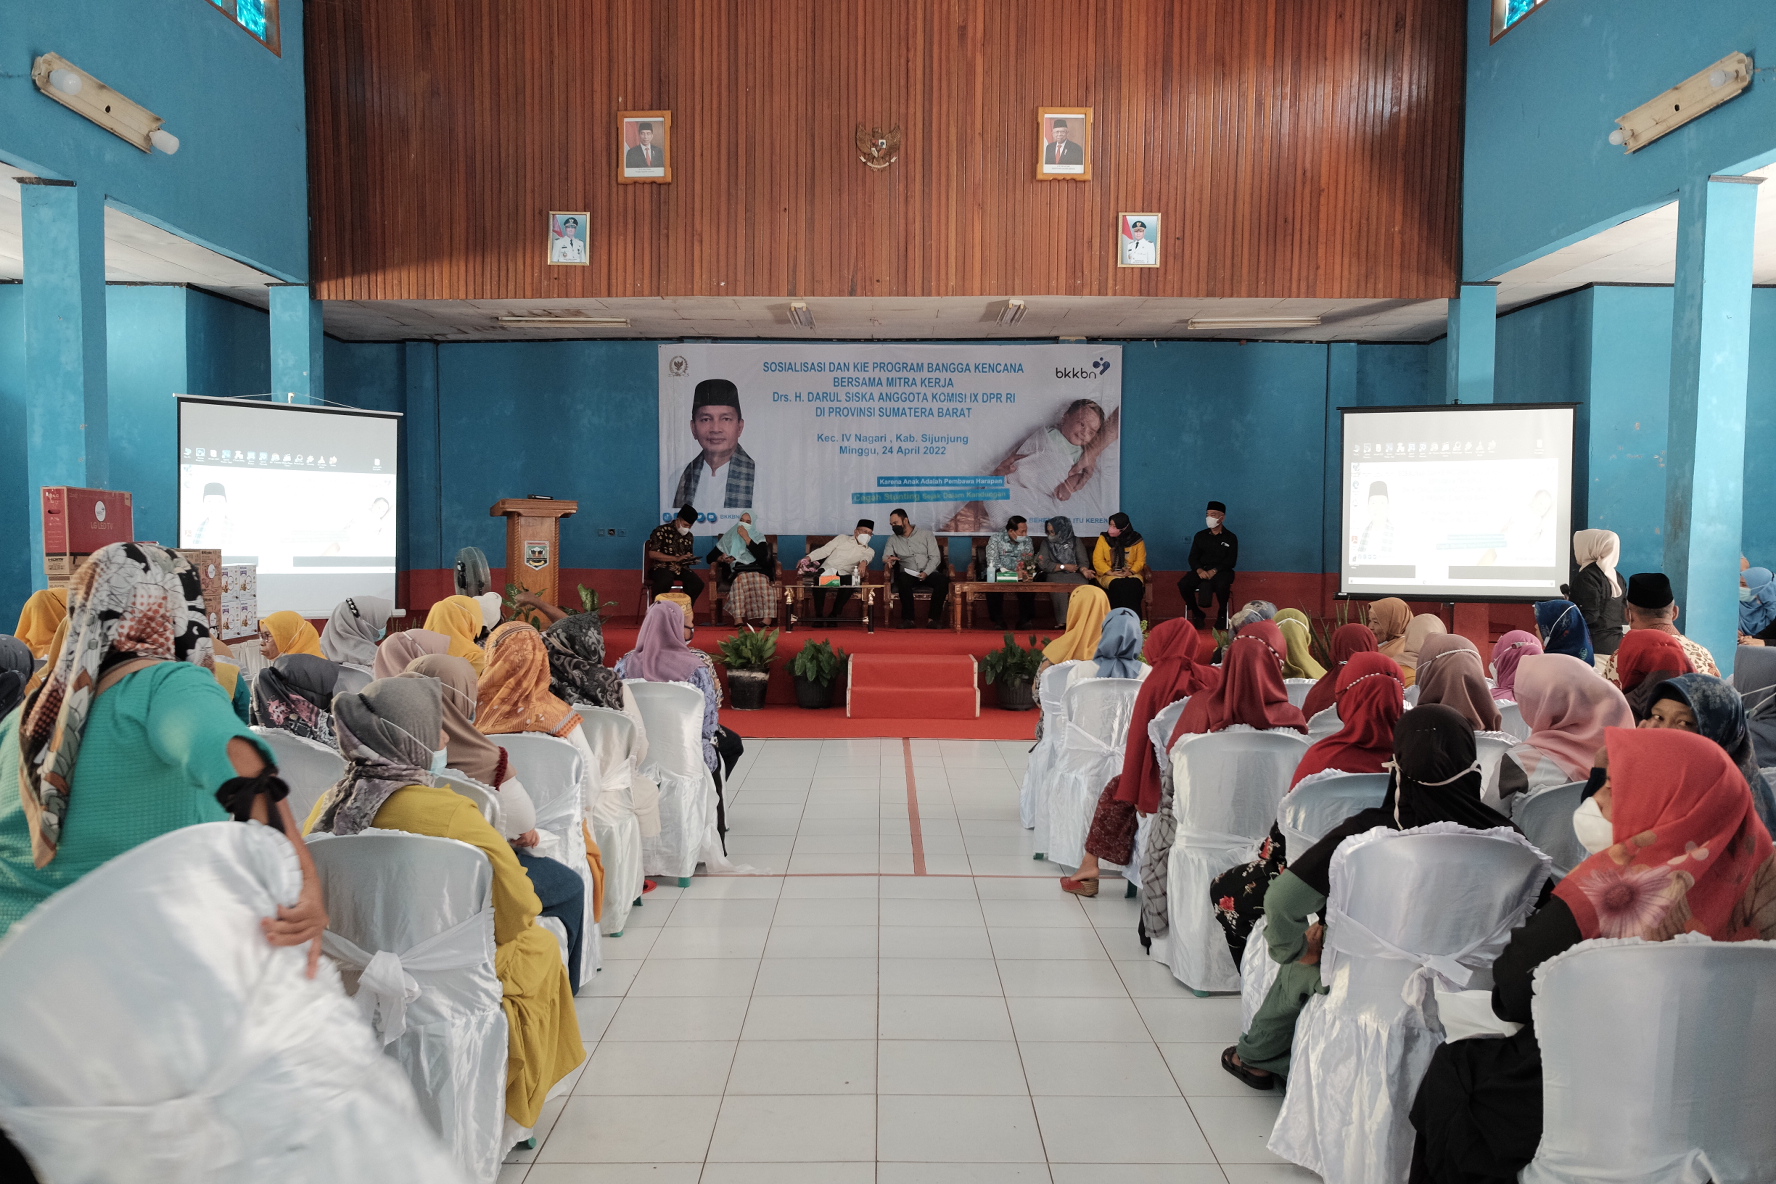 Sosialisasi dan KIE Program Bangga Kencana bersama mitra kerja Komisi IX DPR RI, dalam hal ini Darul Siska sebagai legislator DPR RI, yang pelaksanaan di Kecamatan IV Nagari, Kabupaten Sijunjung, Sumatera Barat (BKKBN/Tanharimage/Halonusa)